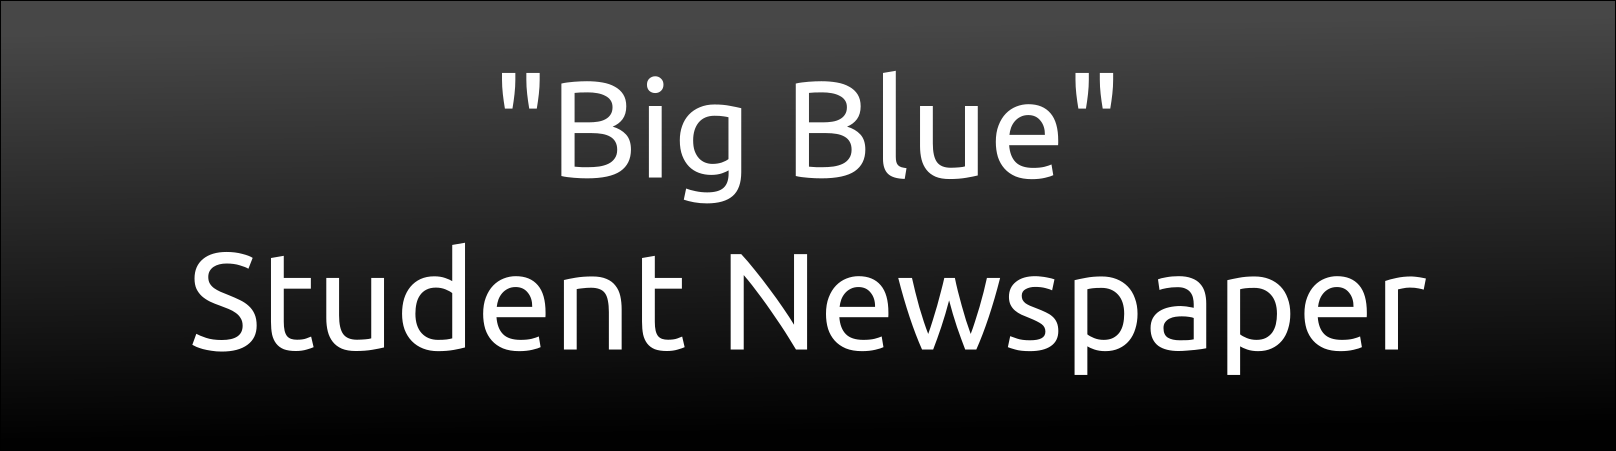 Big Blue Student Newspaper